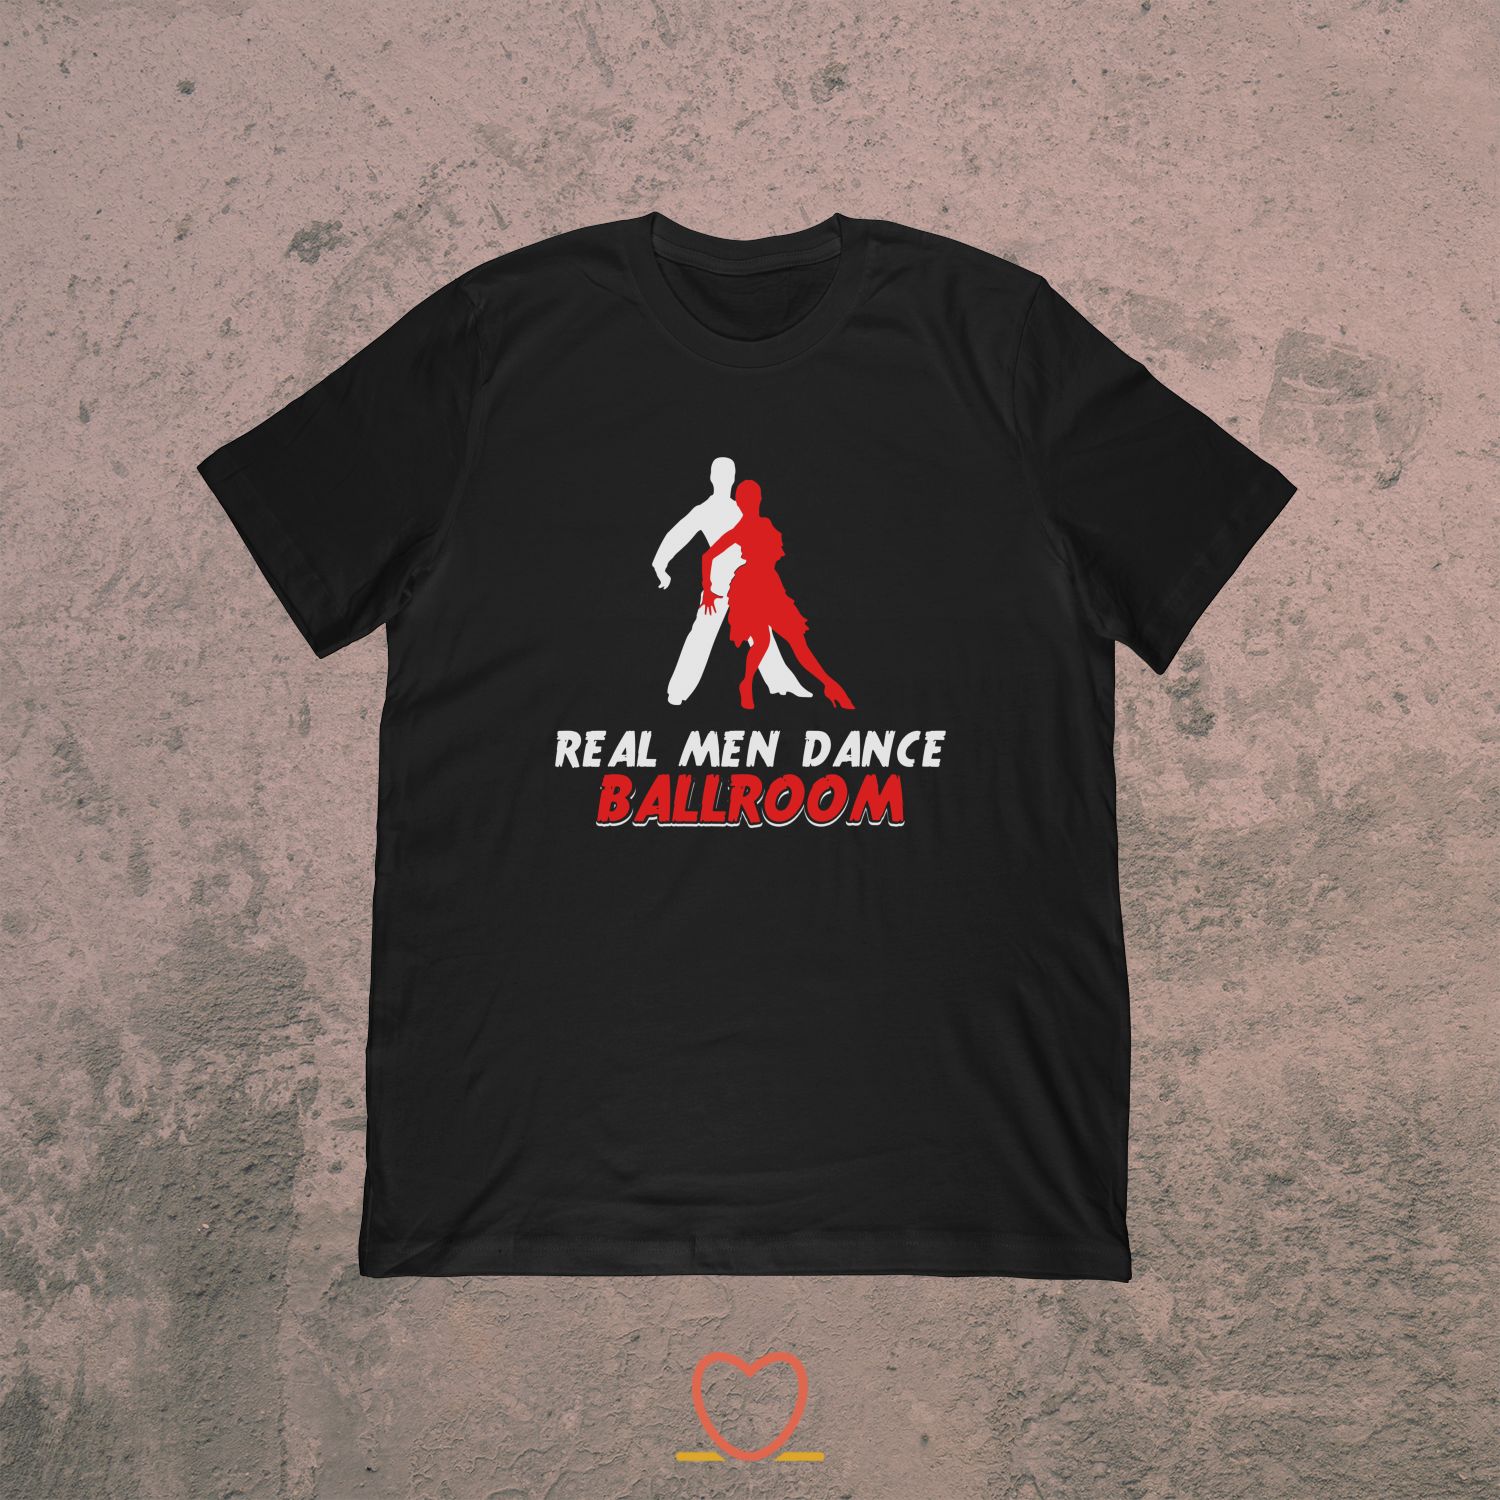 Real Men Dance Ballroom – Ballroom Dancing Tee